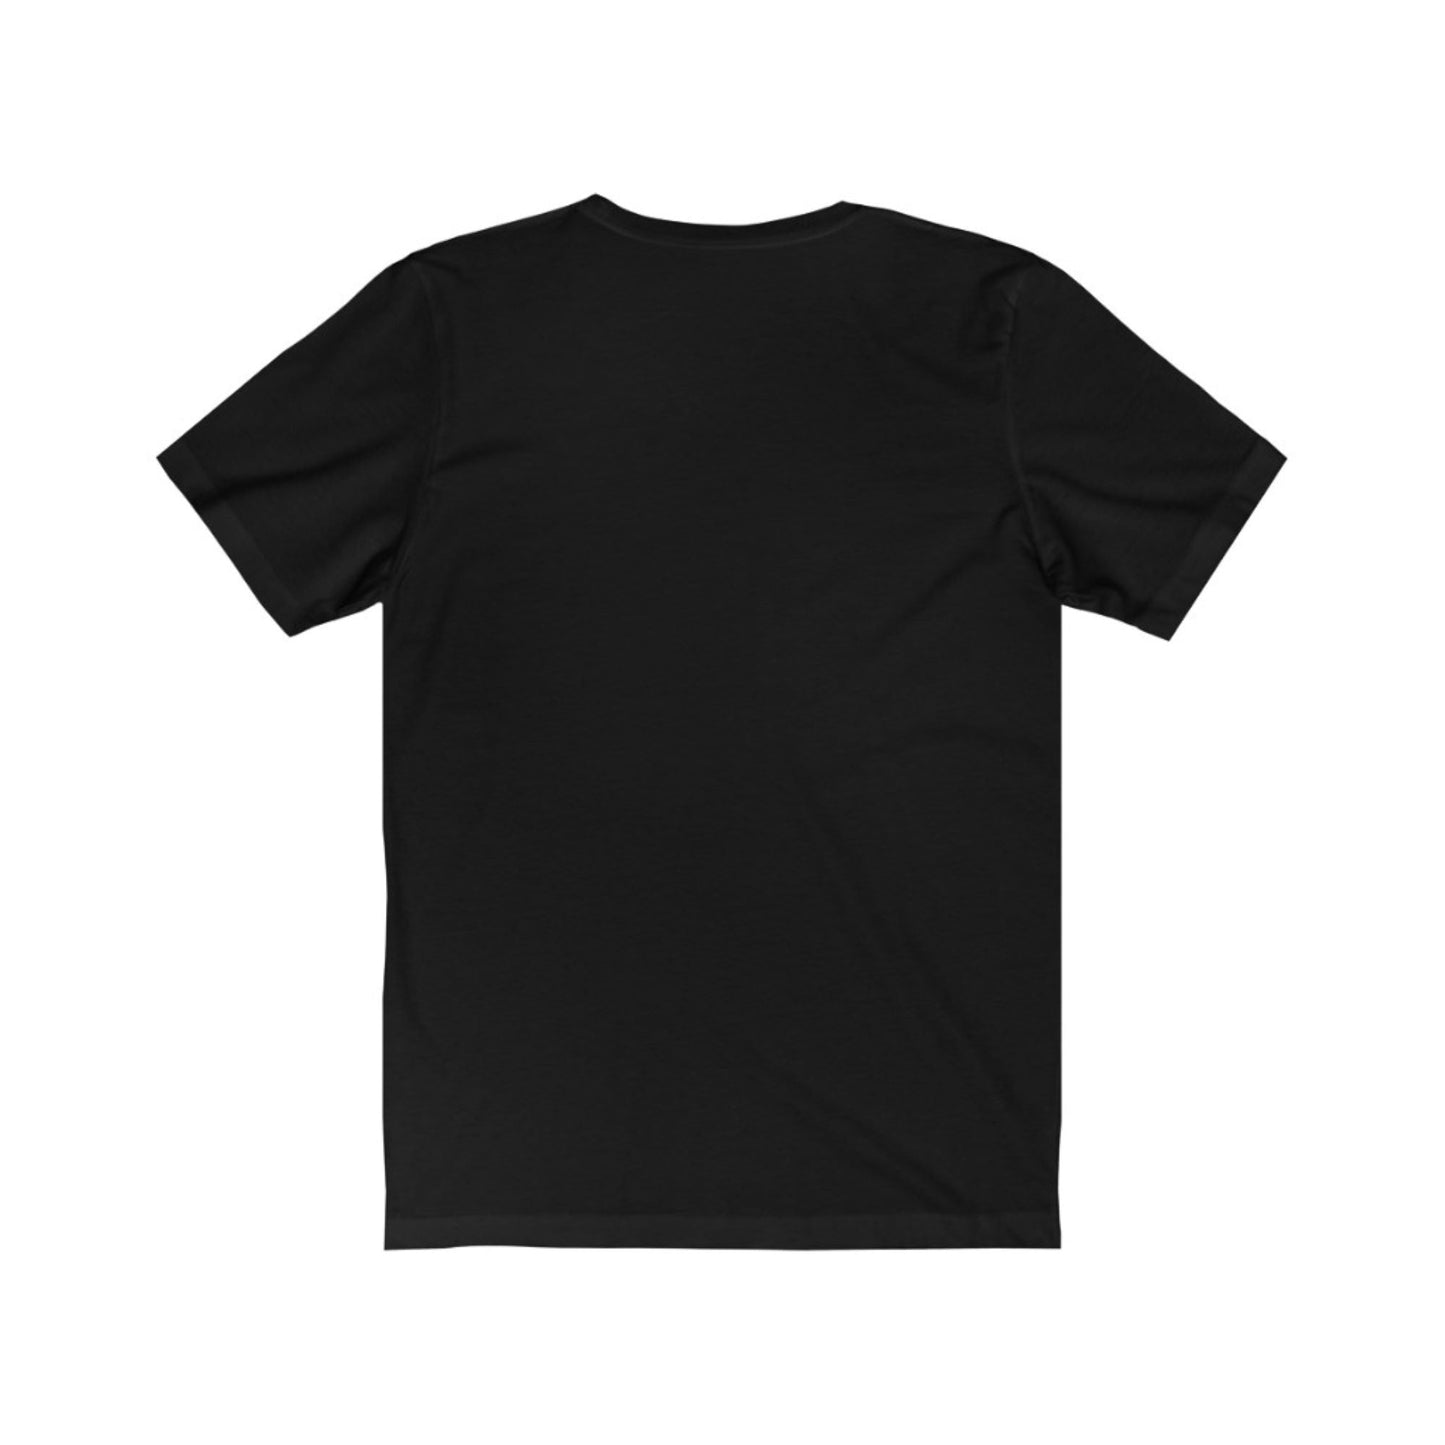 T-Shirt Tshirt Design Gift for Friend and Family Short Sleeved Shirt Geometrically Design Petrova Designs